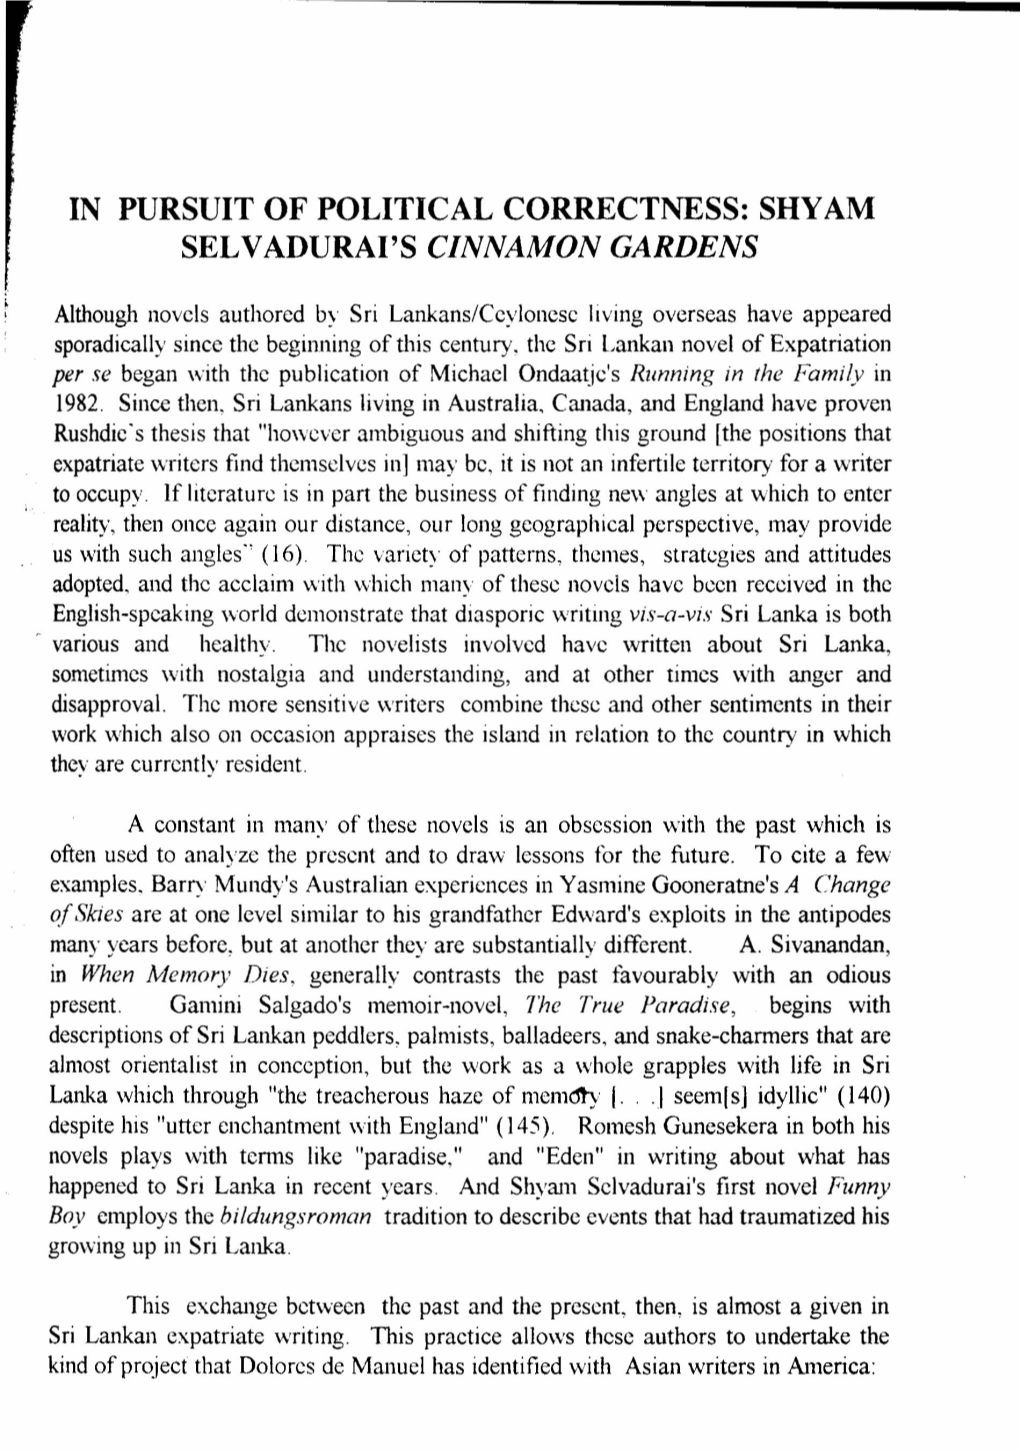 In Pursuit of Political Correctness: Shyam Selvadurai's Cinnamon Gardens